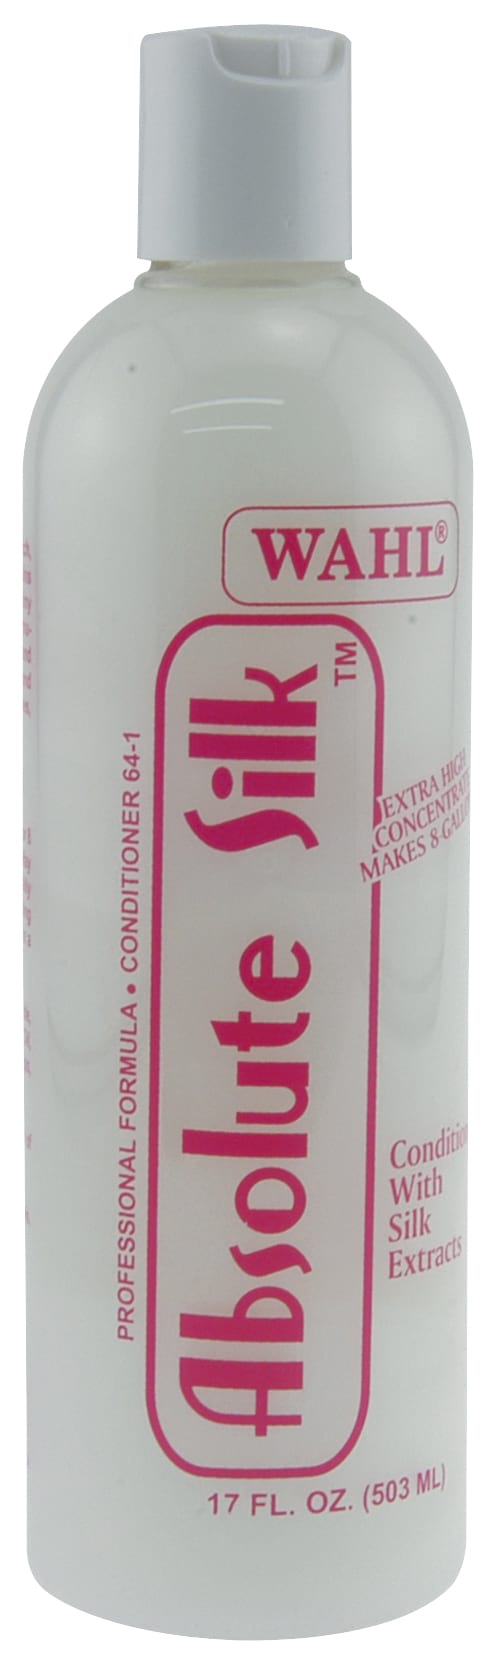 WAHL - Absolute Silk Conditioner